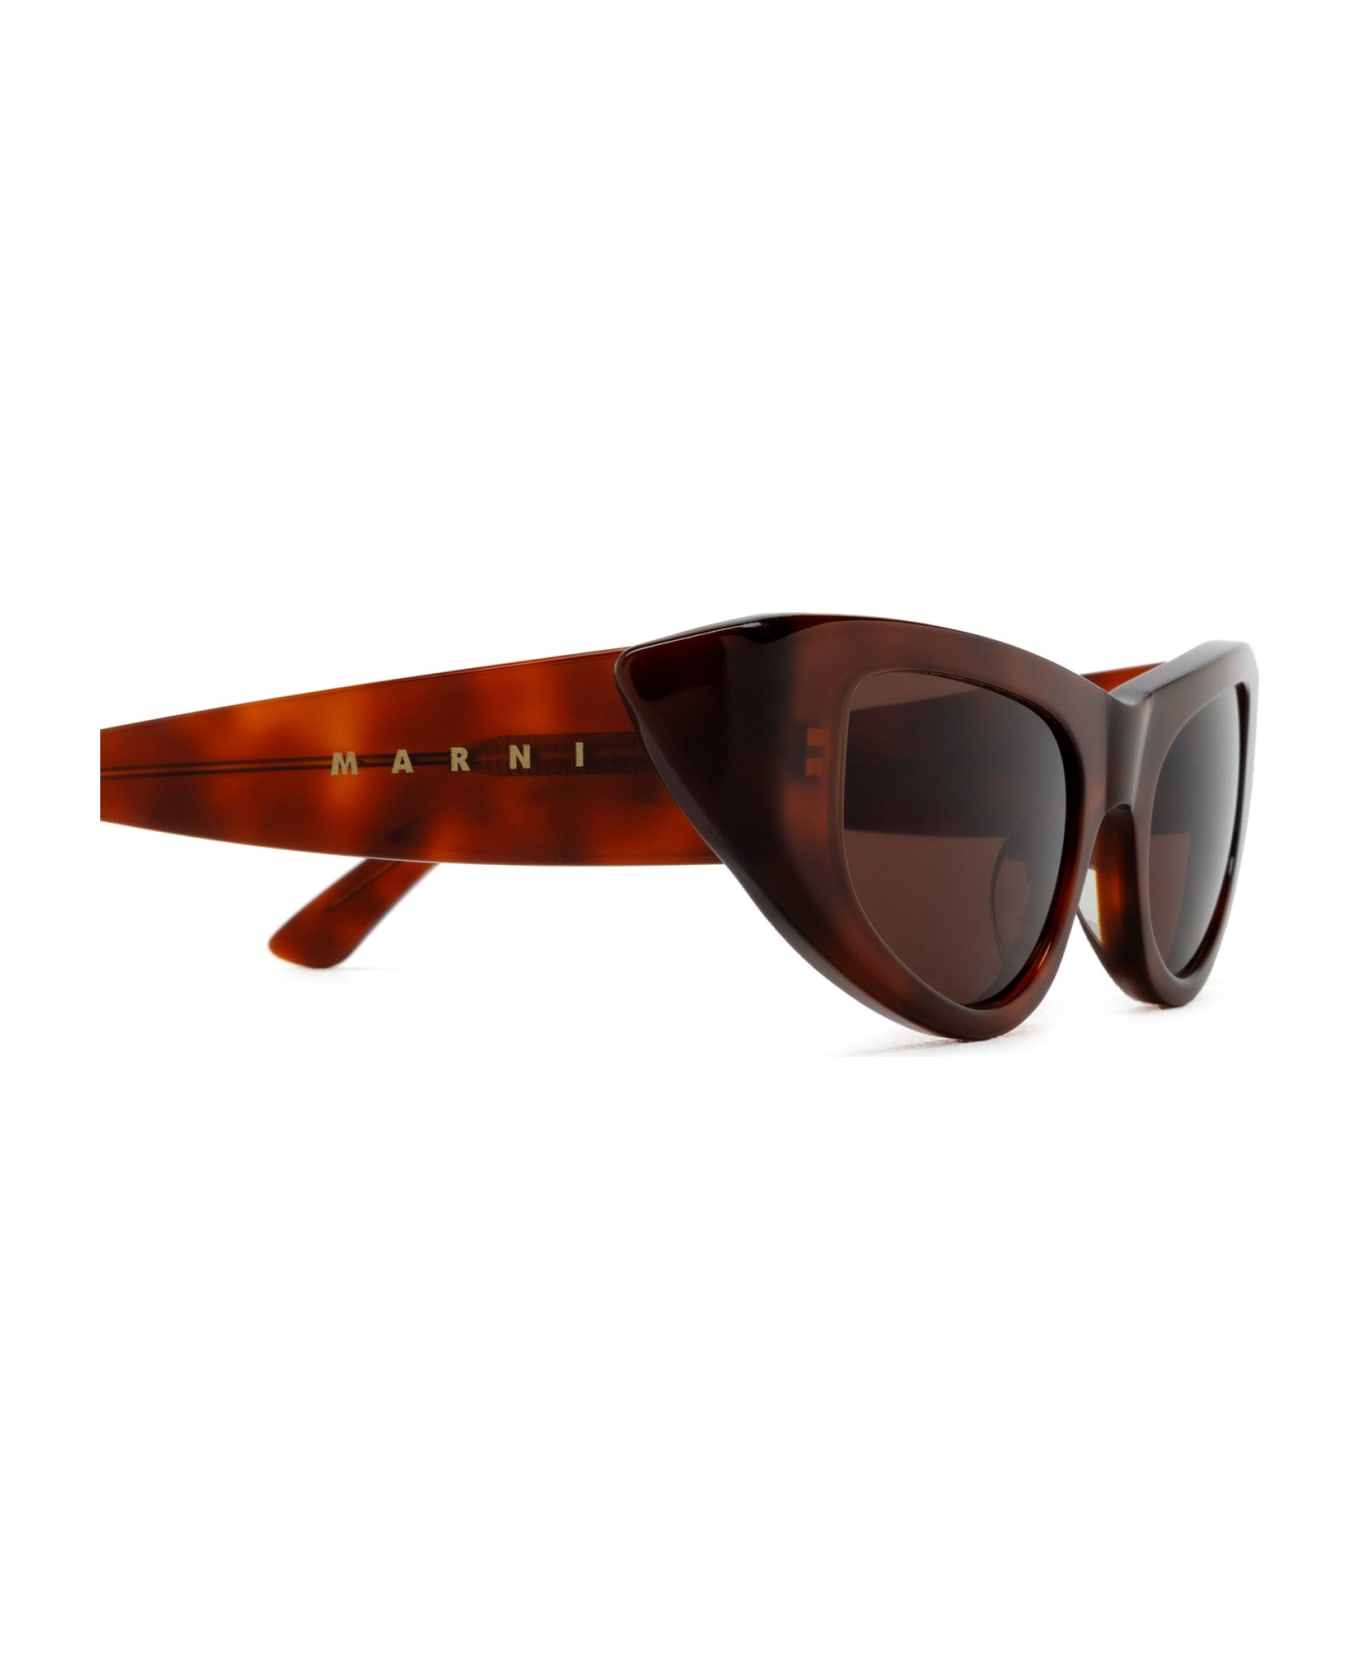 Marni Eyewear Netherworld Havana Sunglasses - Havana